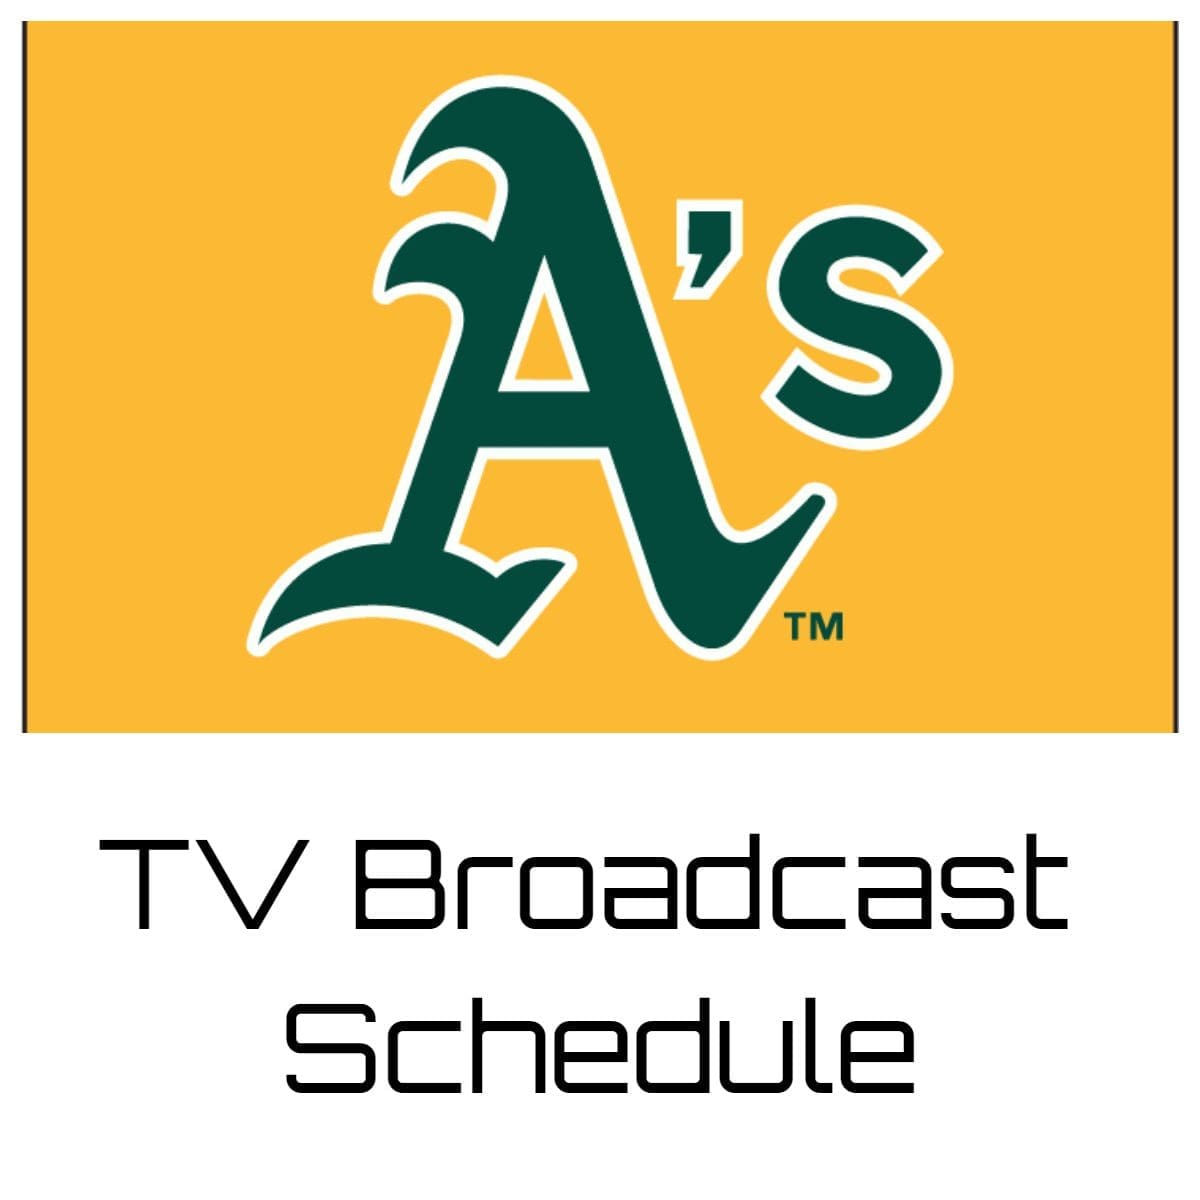 Oakland Athletics TV Broadcast Schedule